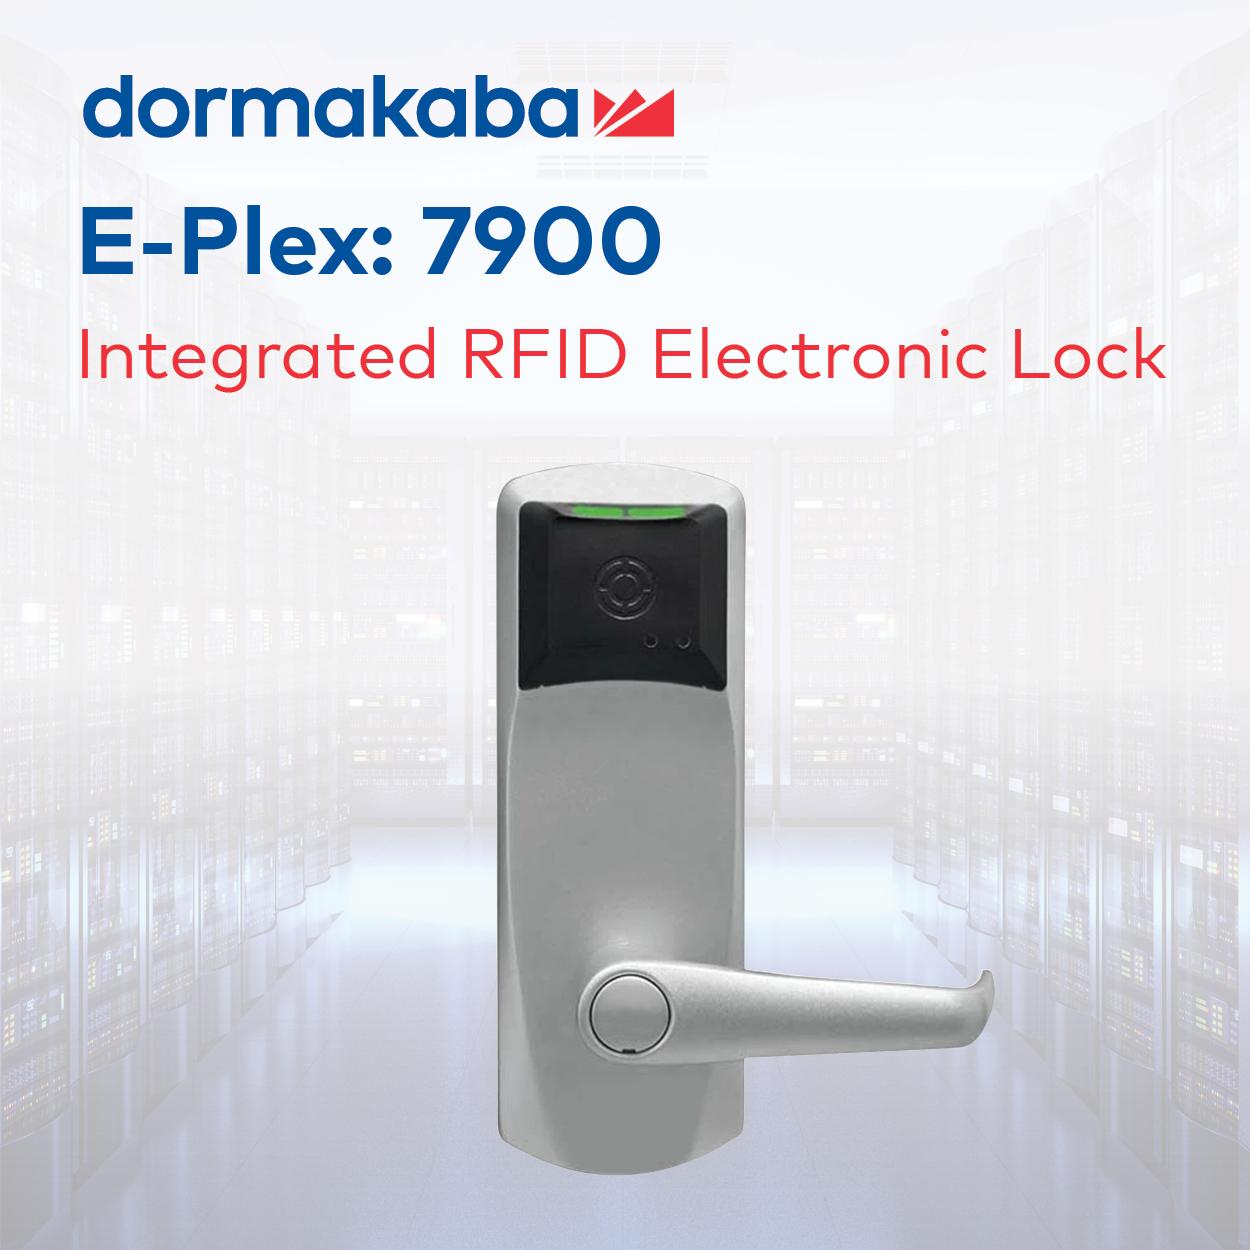 dormakaba E-Plex 7900 RFID Electronic Lock